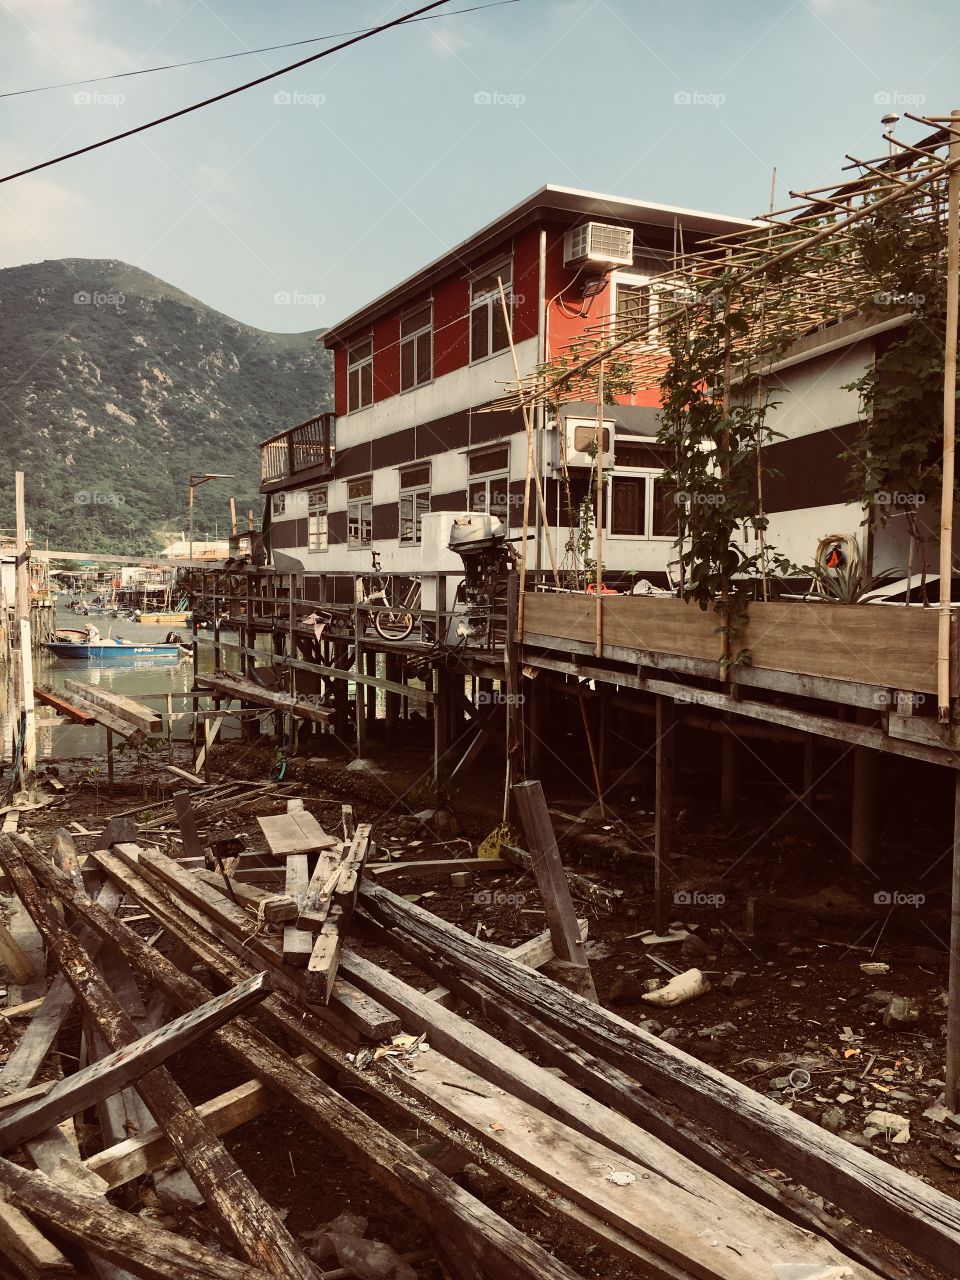 Lan tai Hong Kong. Old fishing village. Rustic, preserved, community, simple living 